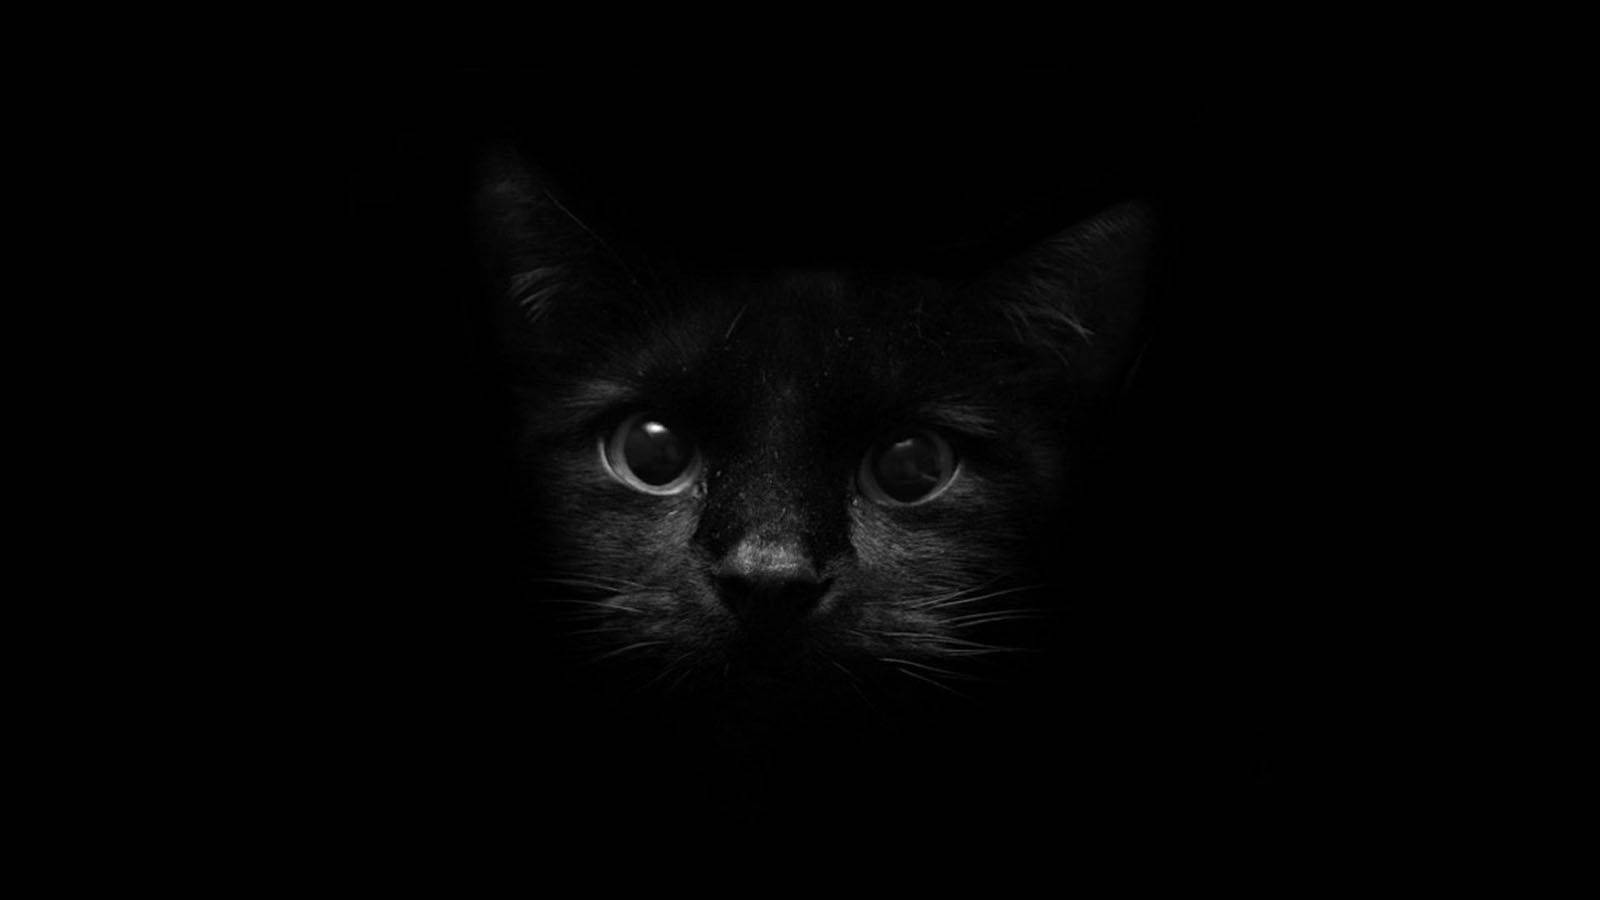 Baby Black Cat With Big Black Eyes Wallpaper